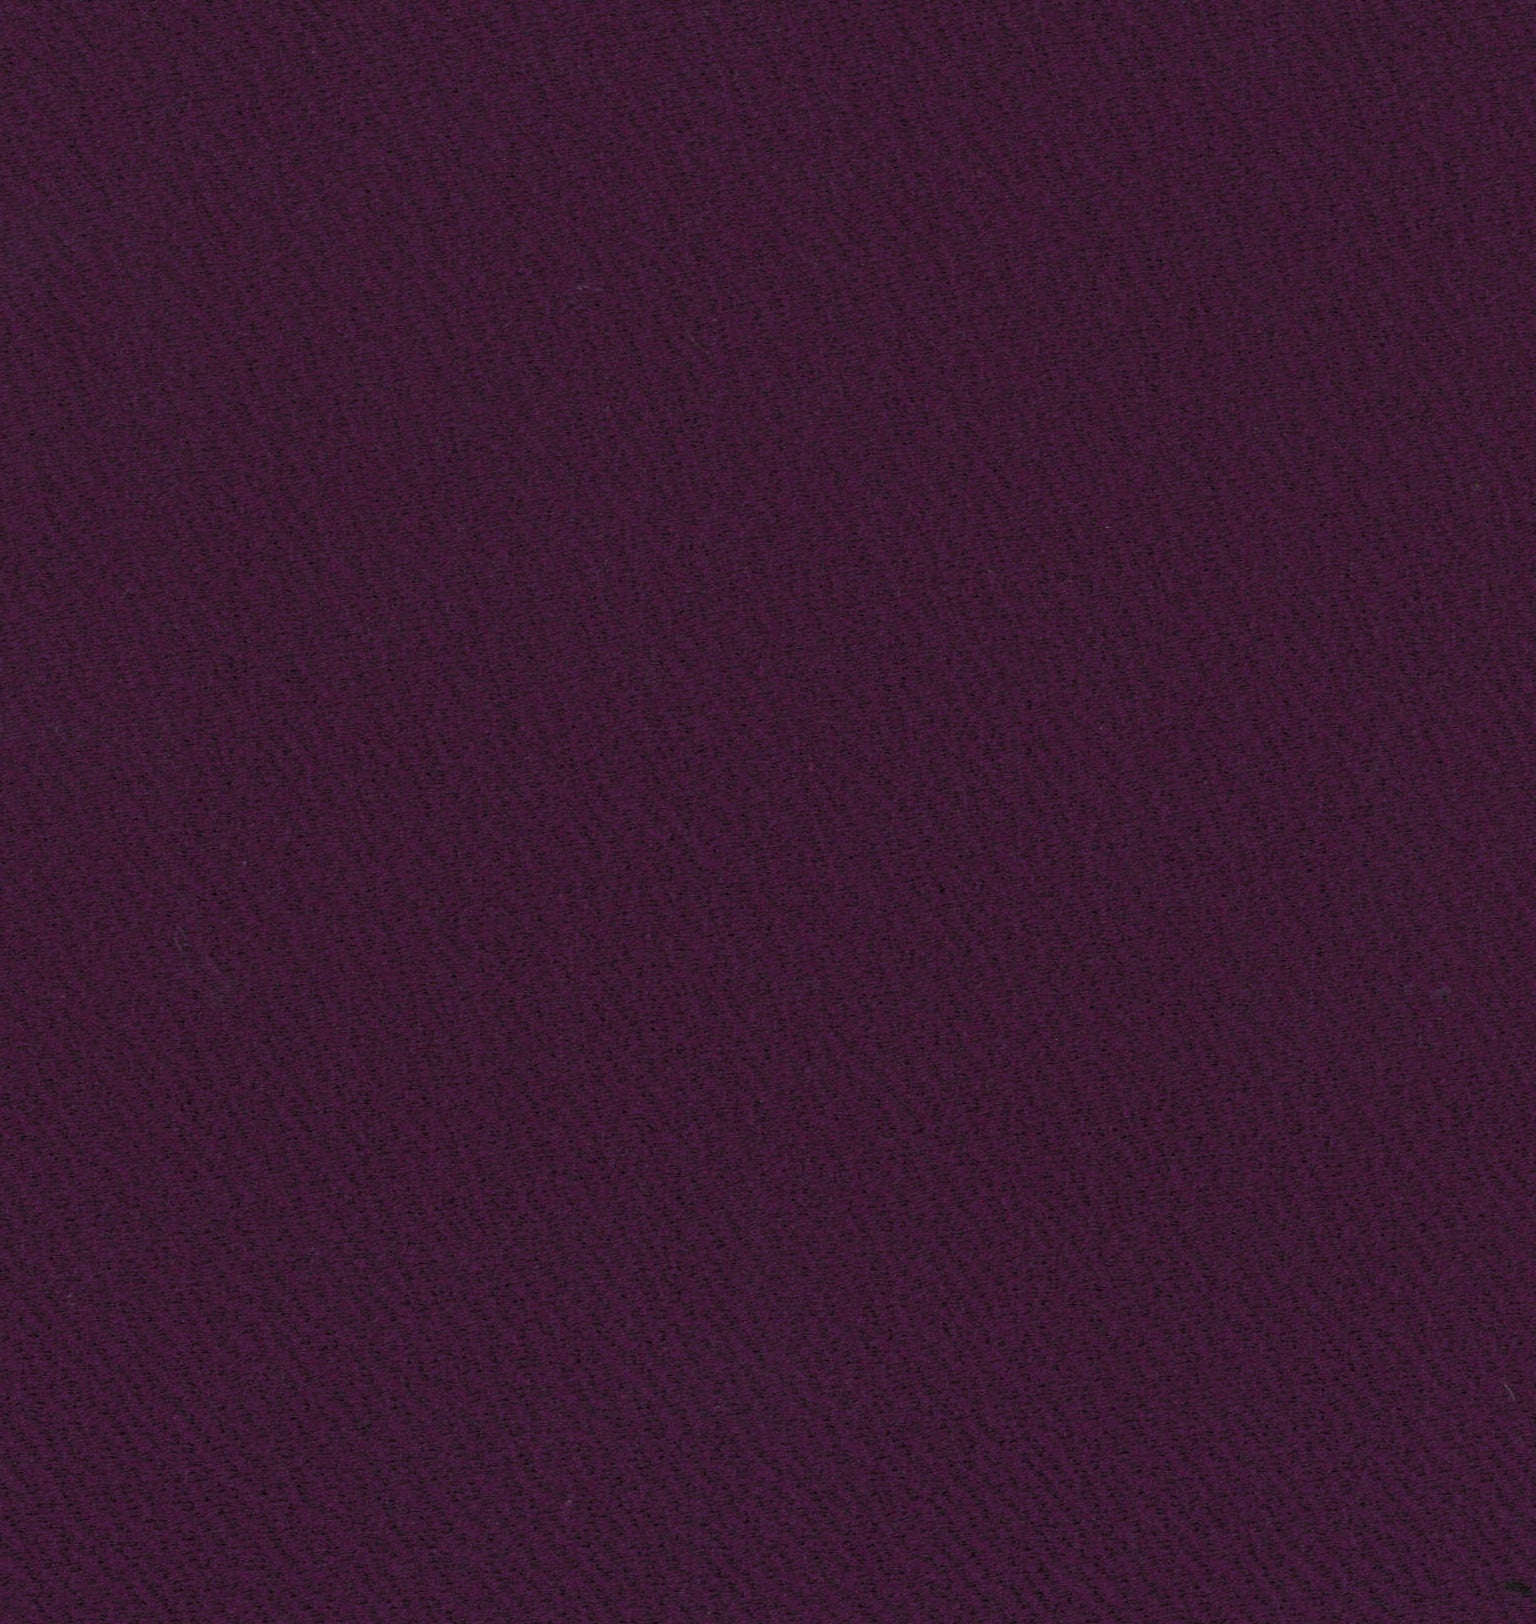 13018-11 Dark Purple Riverpool Jacquard Plain Dyed Blend 260g/yd 58" blend jacquard knit plain dyed polyester purple spandex Solid Color, Jacquard - knit fabric - woven fabric - fabric company - fabric wholesale - fabric b2b - fabric factory - high quality fabric - hong kong fabric - fabric hk - acetate fabric - cotton fabric - linen fabric - metallic fabric - nylon fabric - polyester fabric - spandex fabric - chun wing hing - cwh hk - fabric worldwide ship - 針織布 - 梳織布 - 布料公司- 布料批發 - 香港布料 - 秦榮興